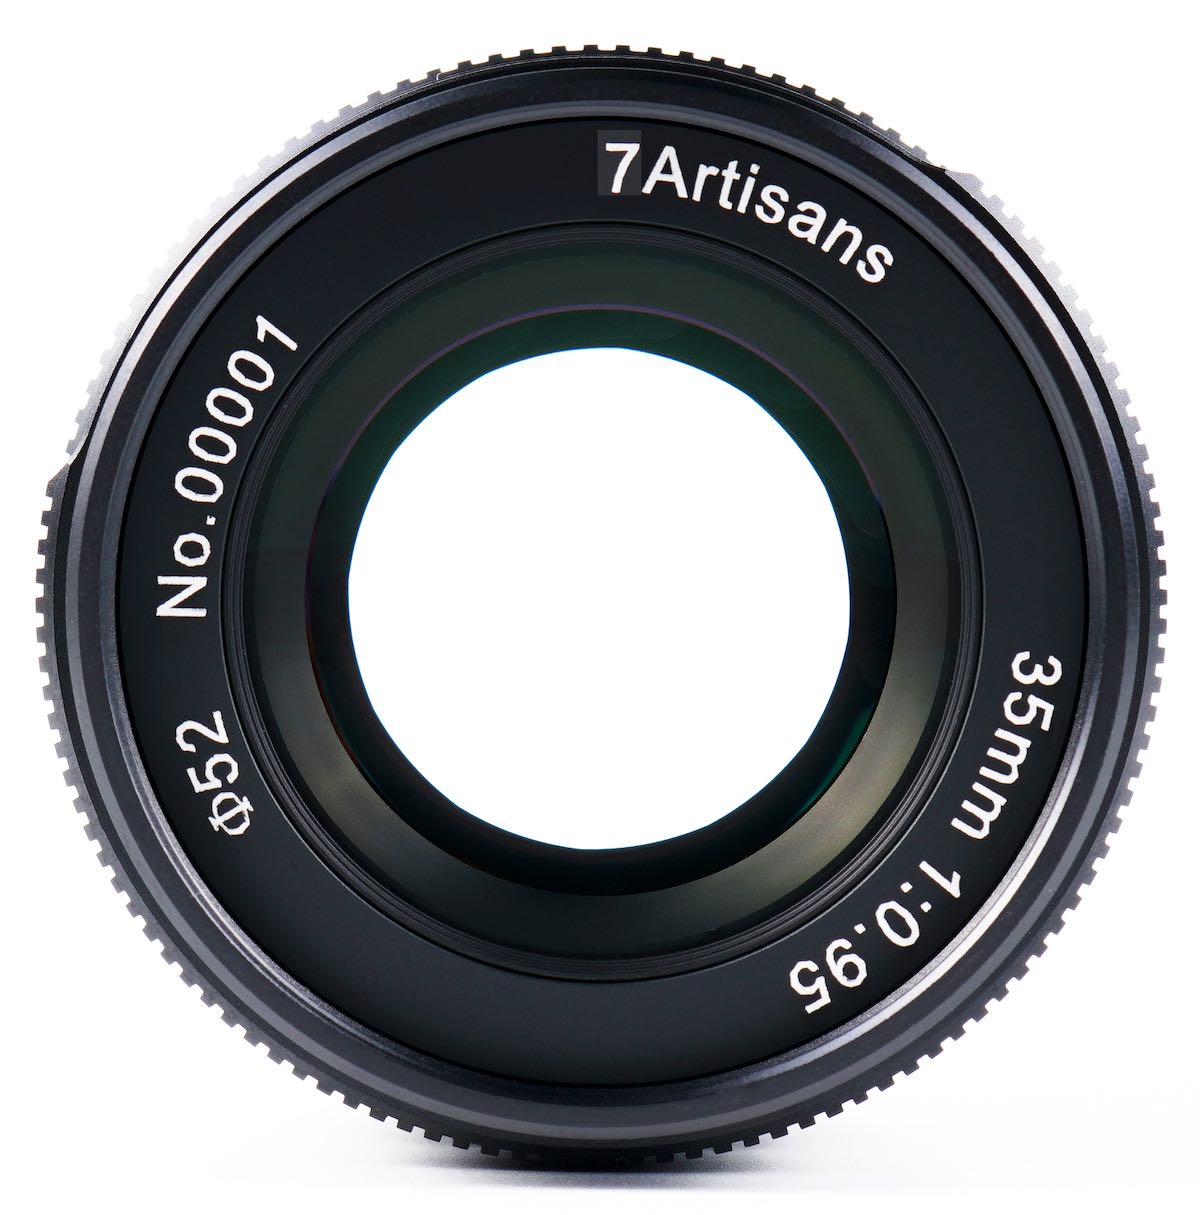 7artisans Objectif 35mm F0.95 Grand Angle Mise au Point Manuelle APS-C avec Nikon Z Monture pour Appareil Photo caméra sans Miroir Nikon Z50 Z5 Z6 Z6II Z7 Z7II 